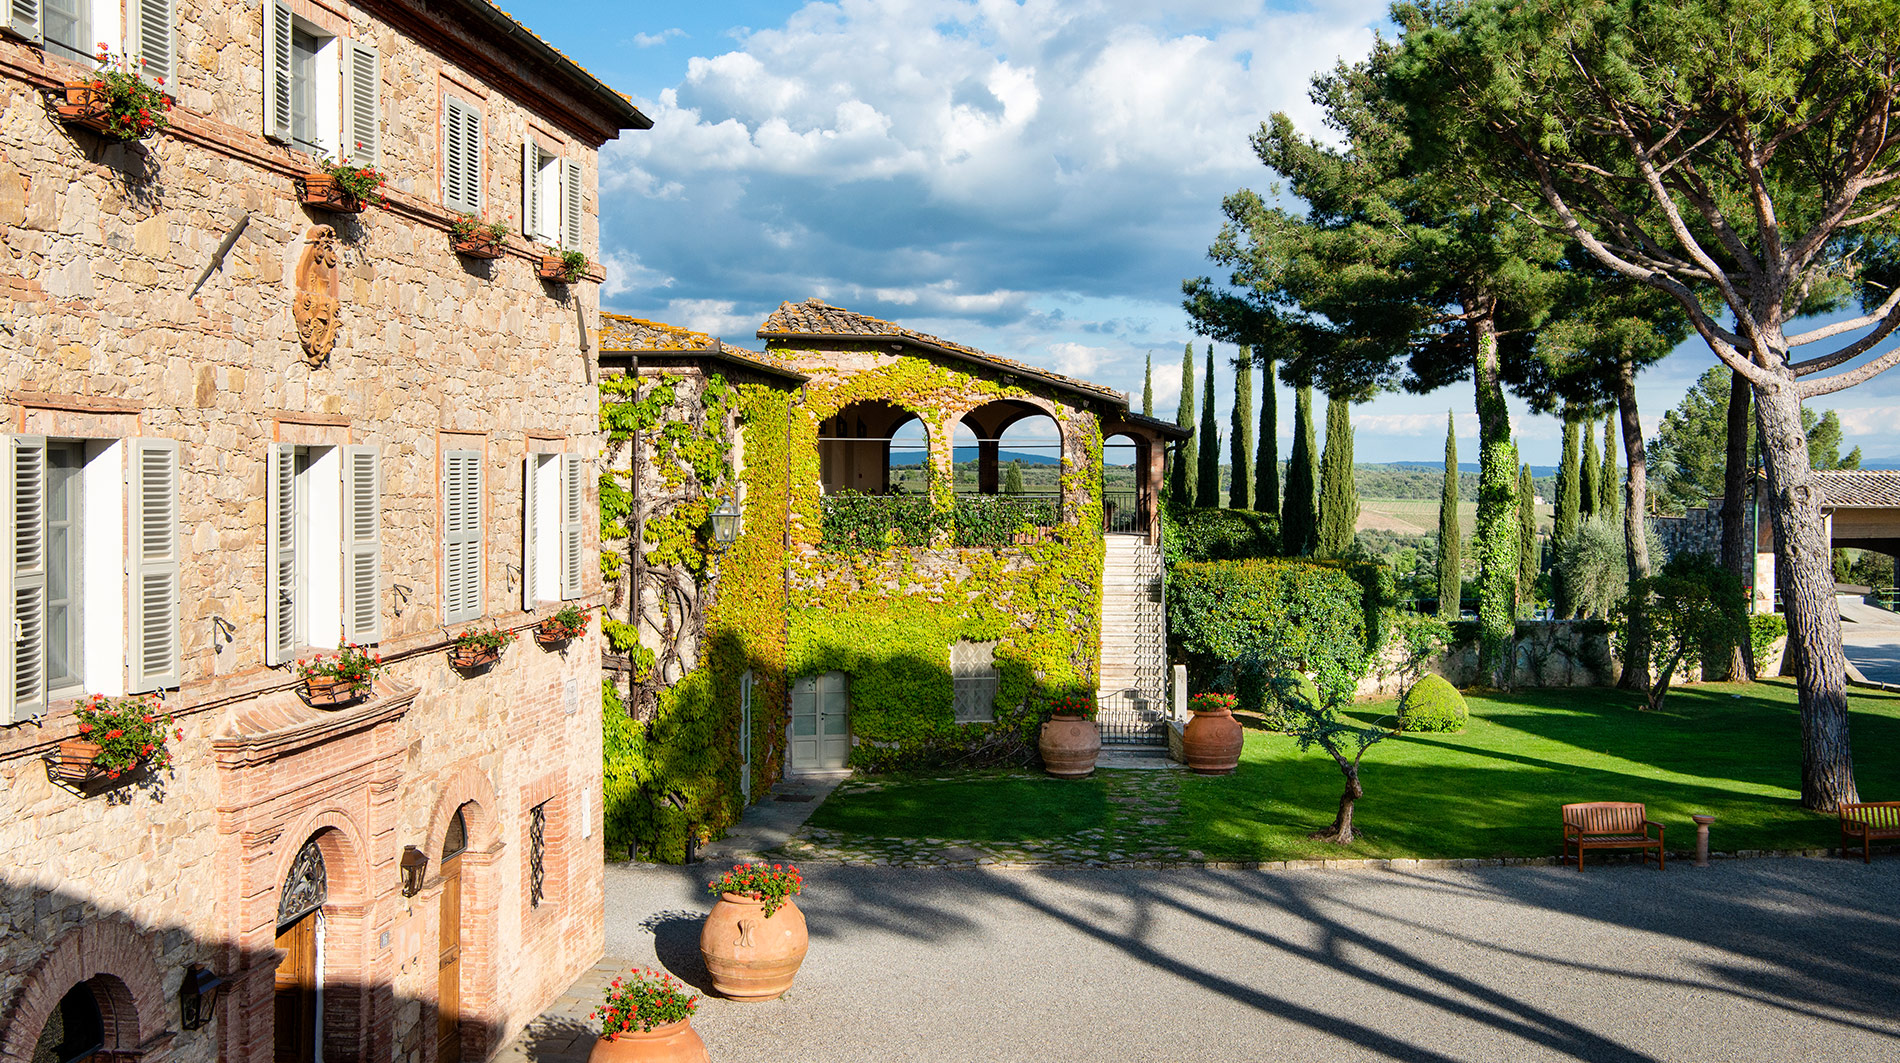 Borgo San Felice - Tuscany Hotels - Castelnuovo Berardenga, Italy